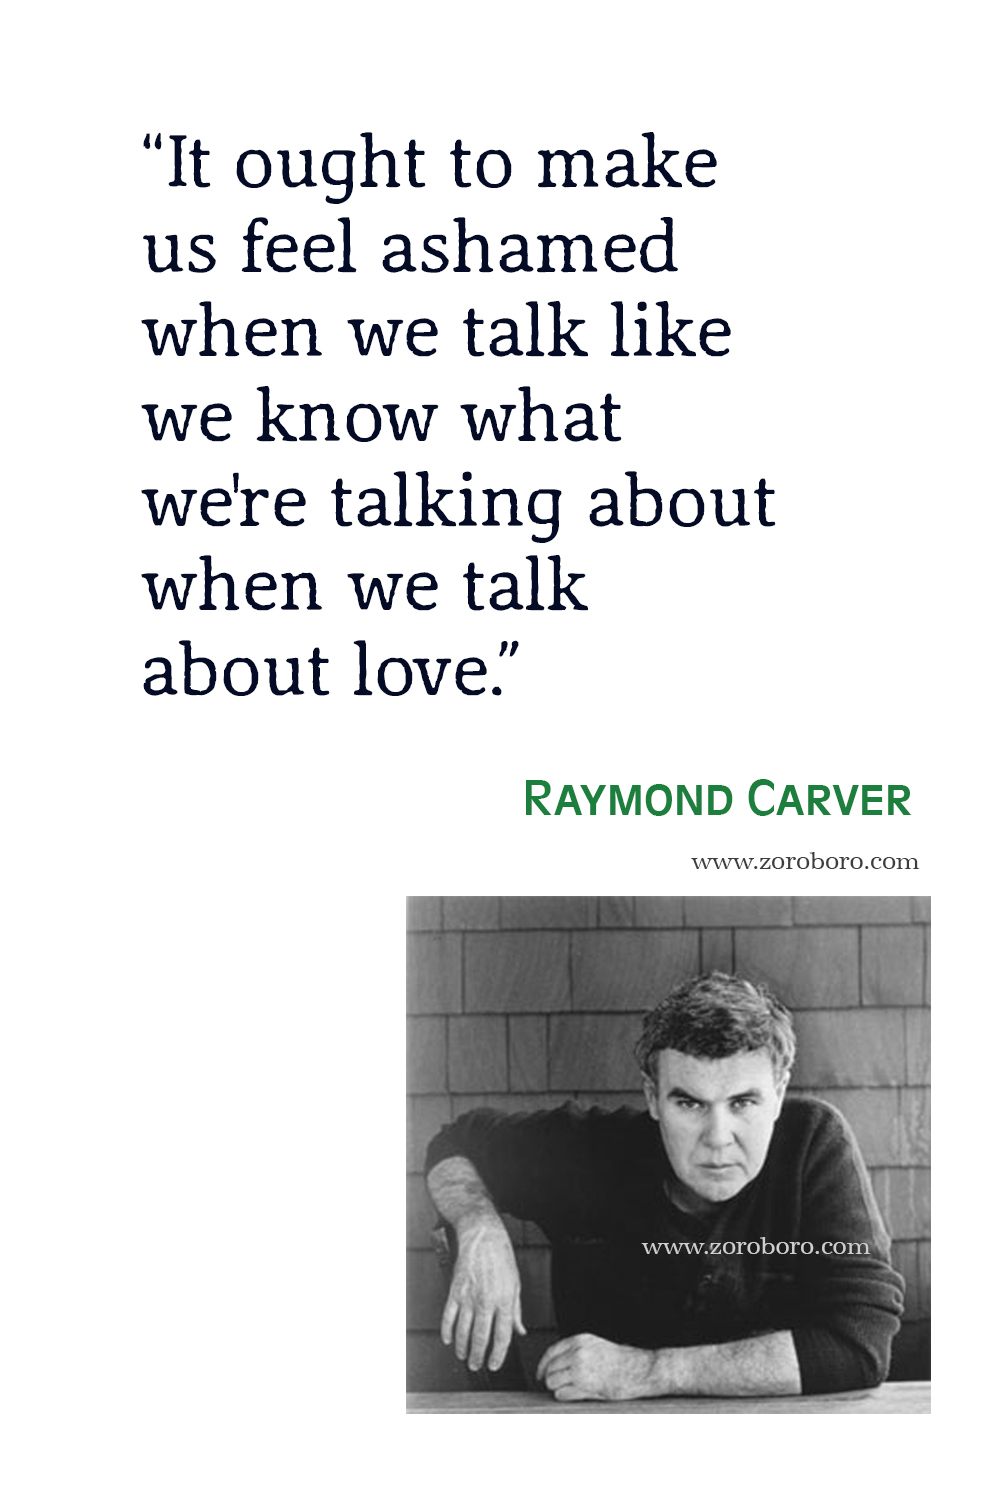 Raymond Carver Quotes, Raymond Carver Essays, Raymond Carver Poems, Raymond Carver Stories, Raymond carver What We Talk About When We Talk About Love, Raymond carver cathedral, Books.